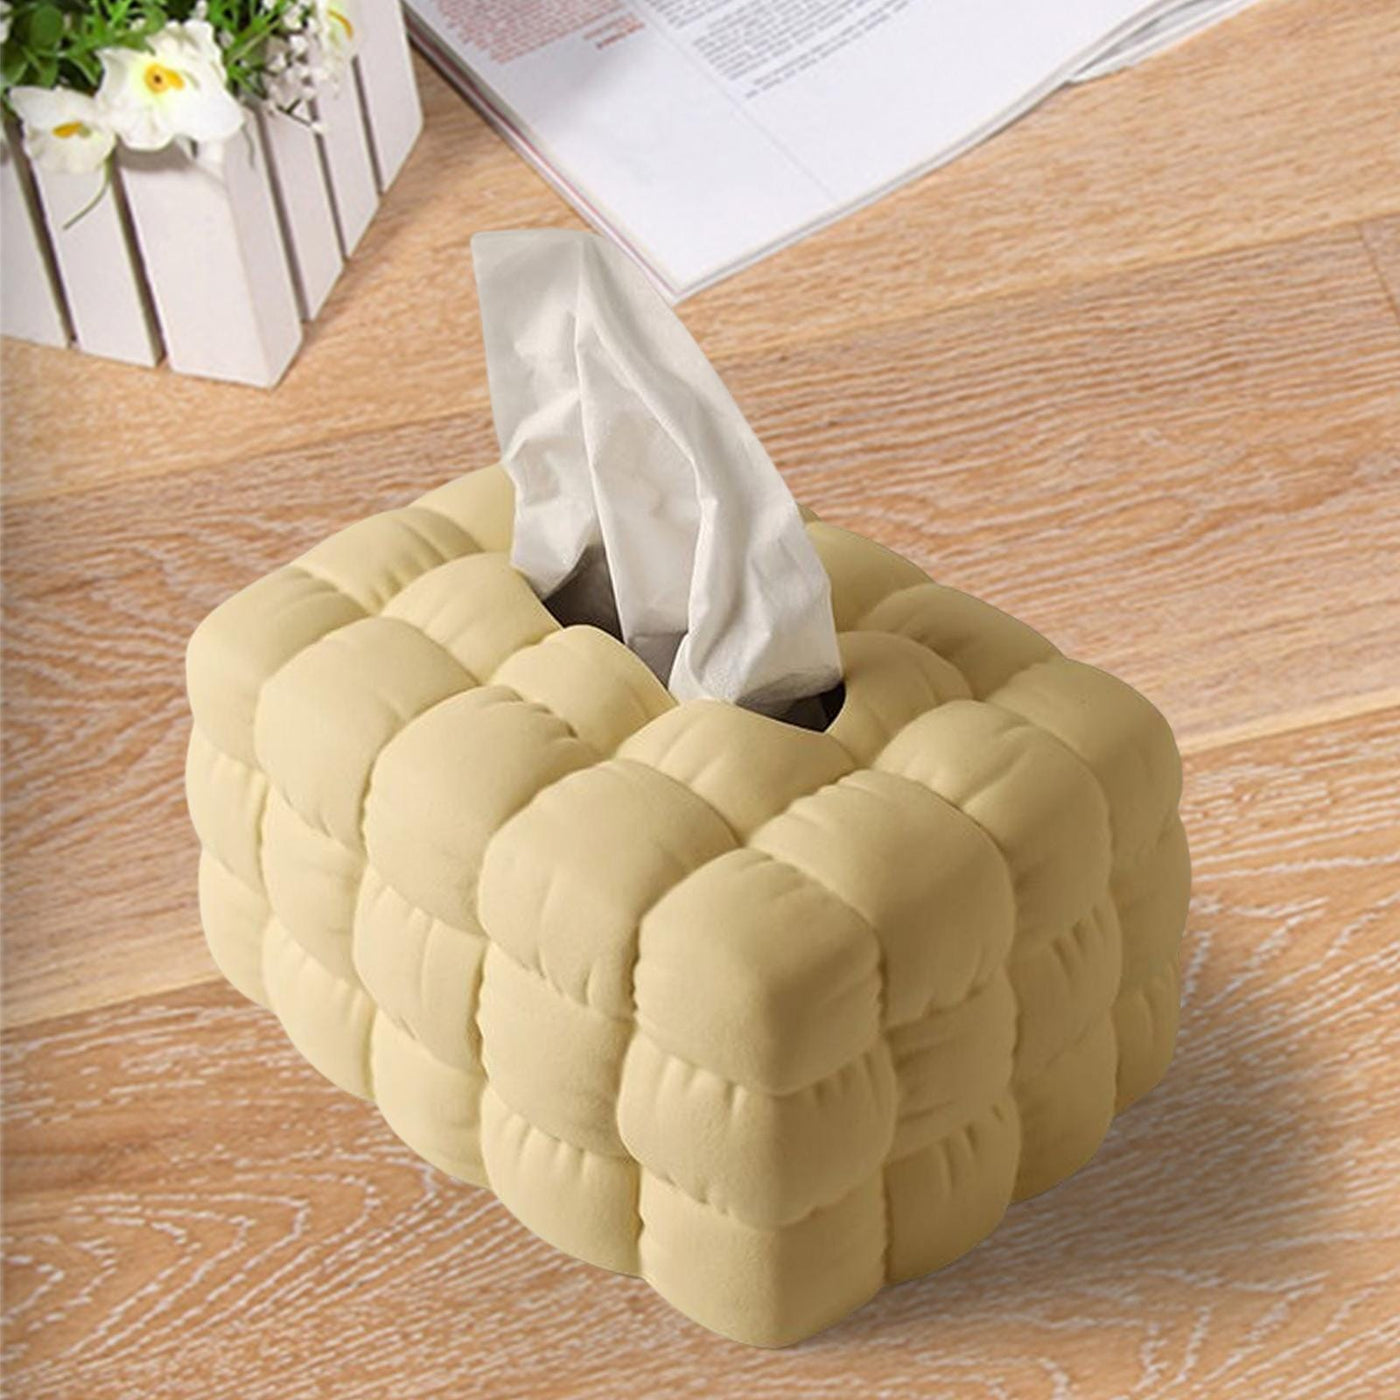 Ceramic Tissue Box ,Tissue Paper Holder